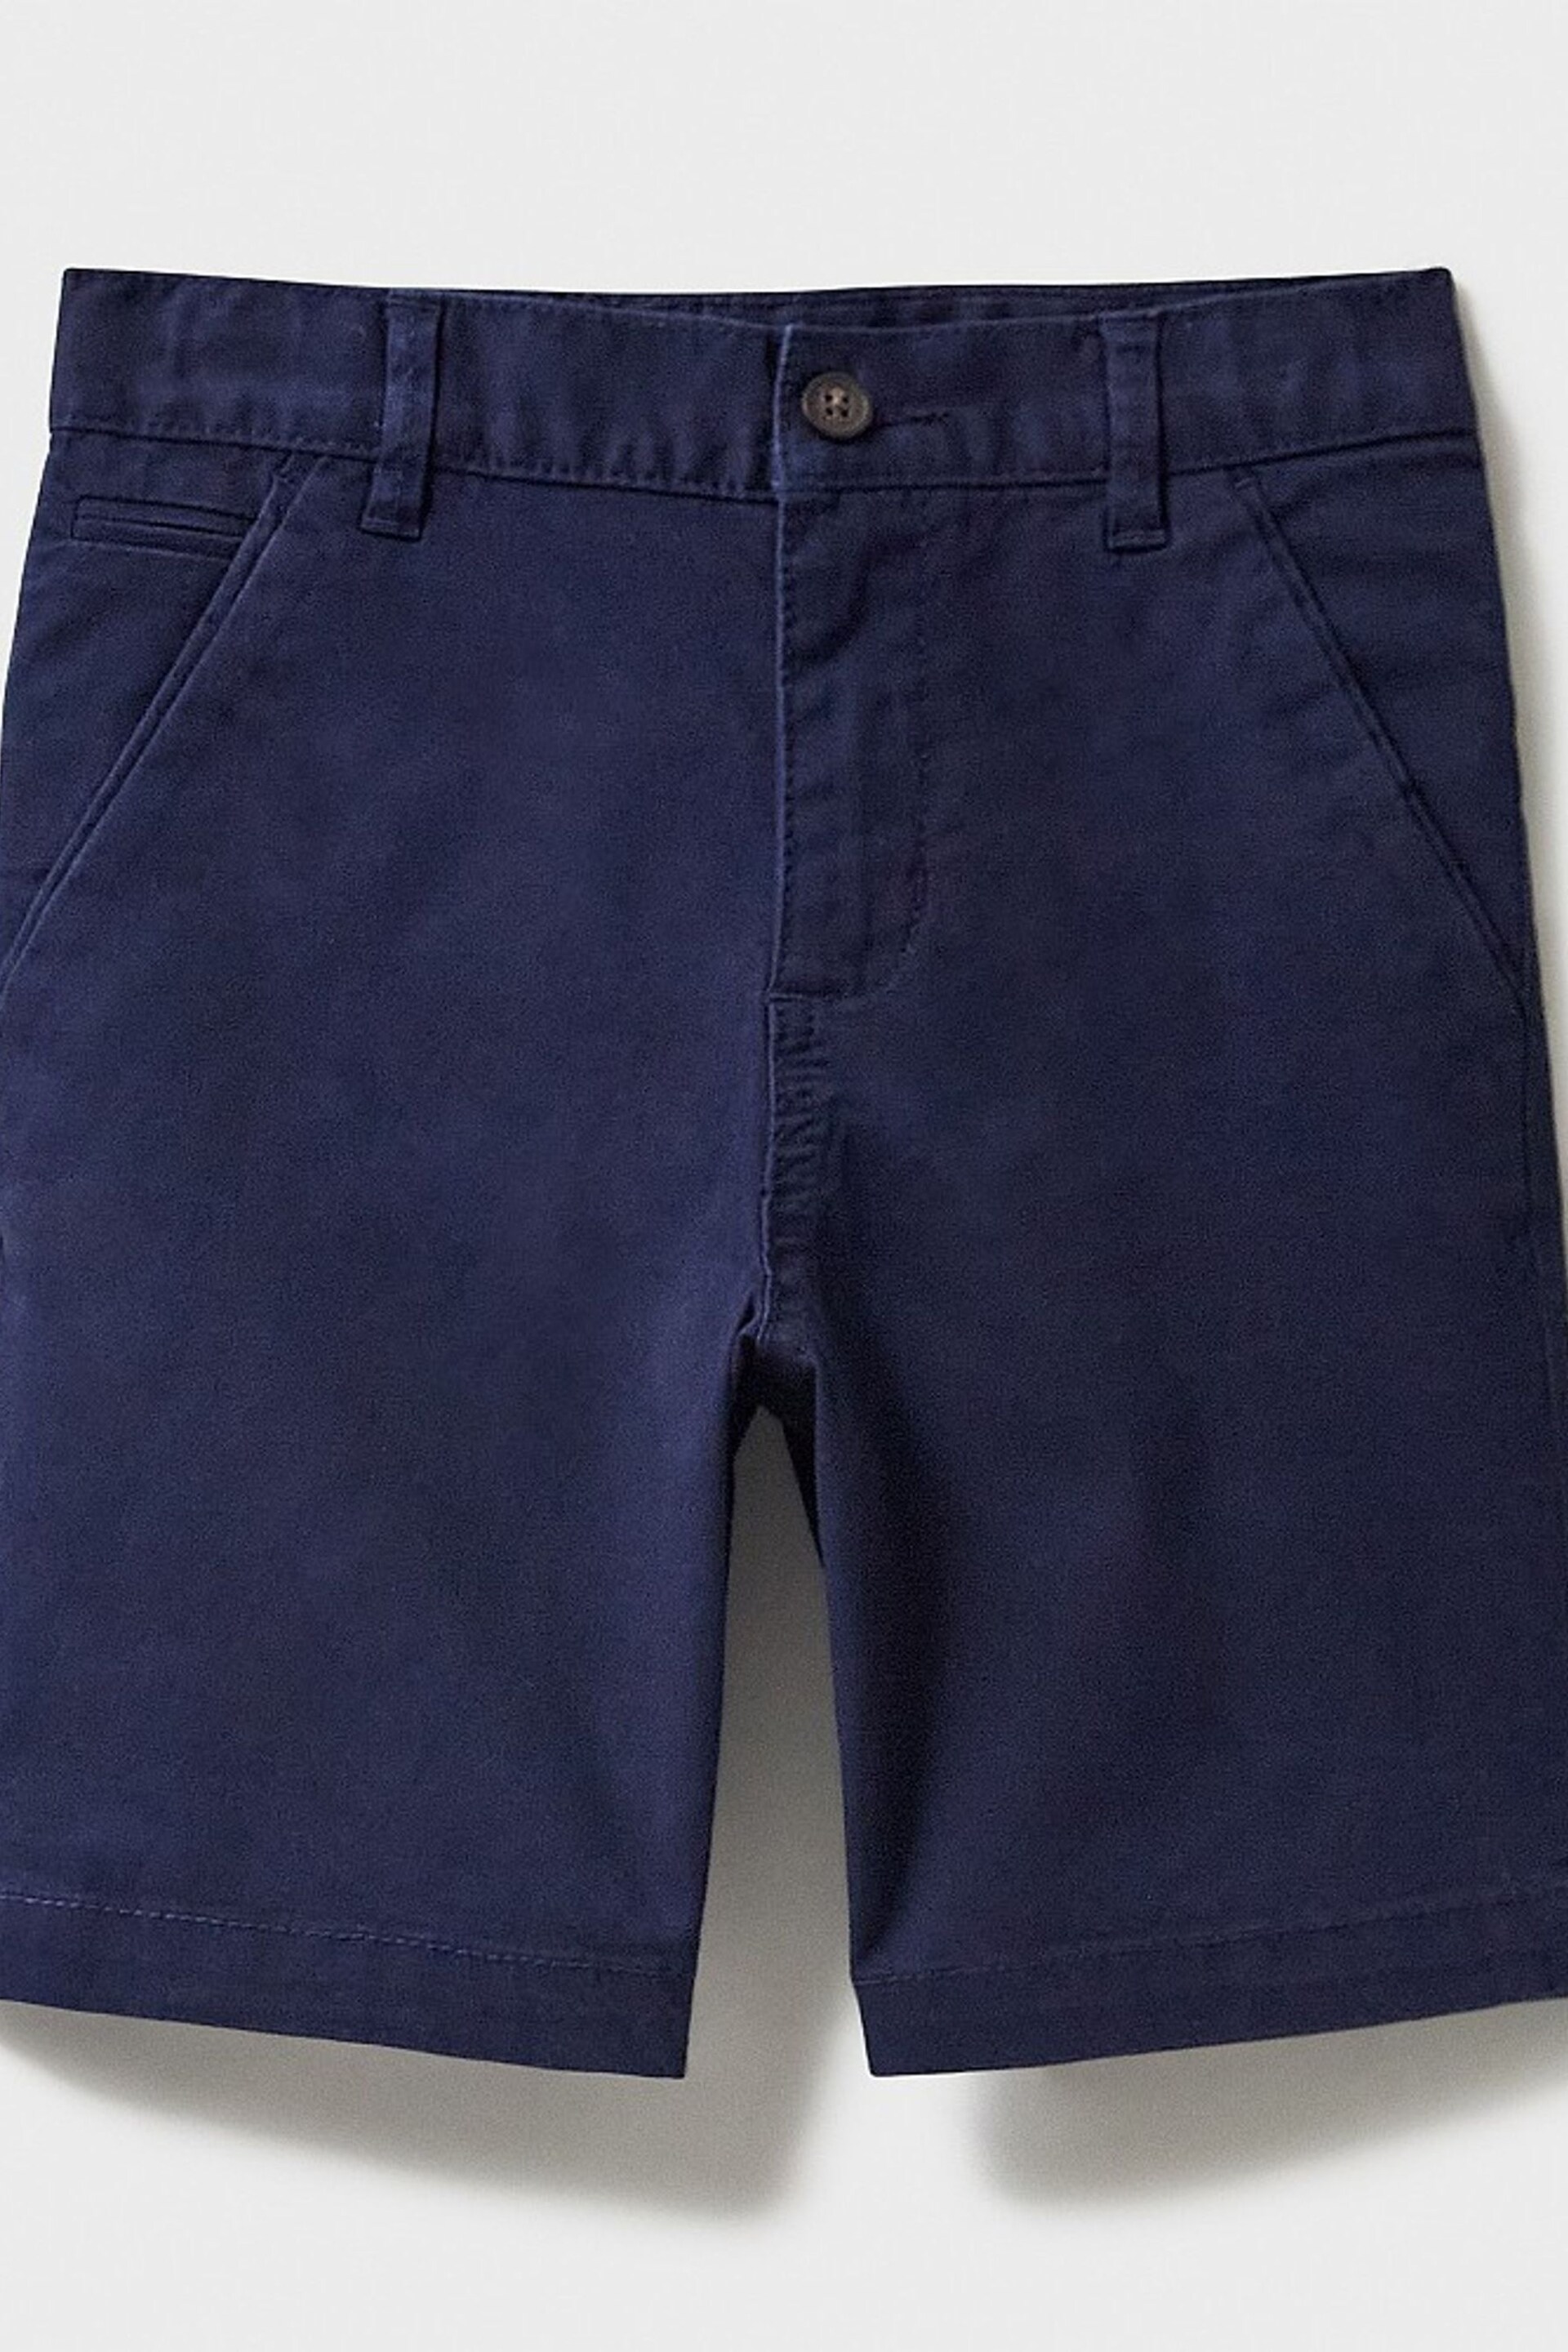 Crew Clothing Classic Chino Shorts - Image 3 of 3